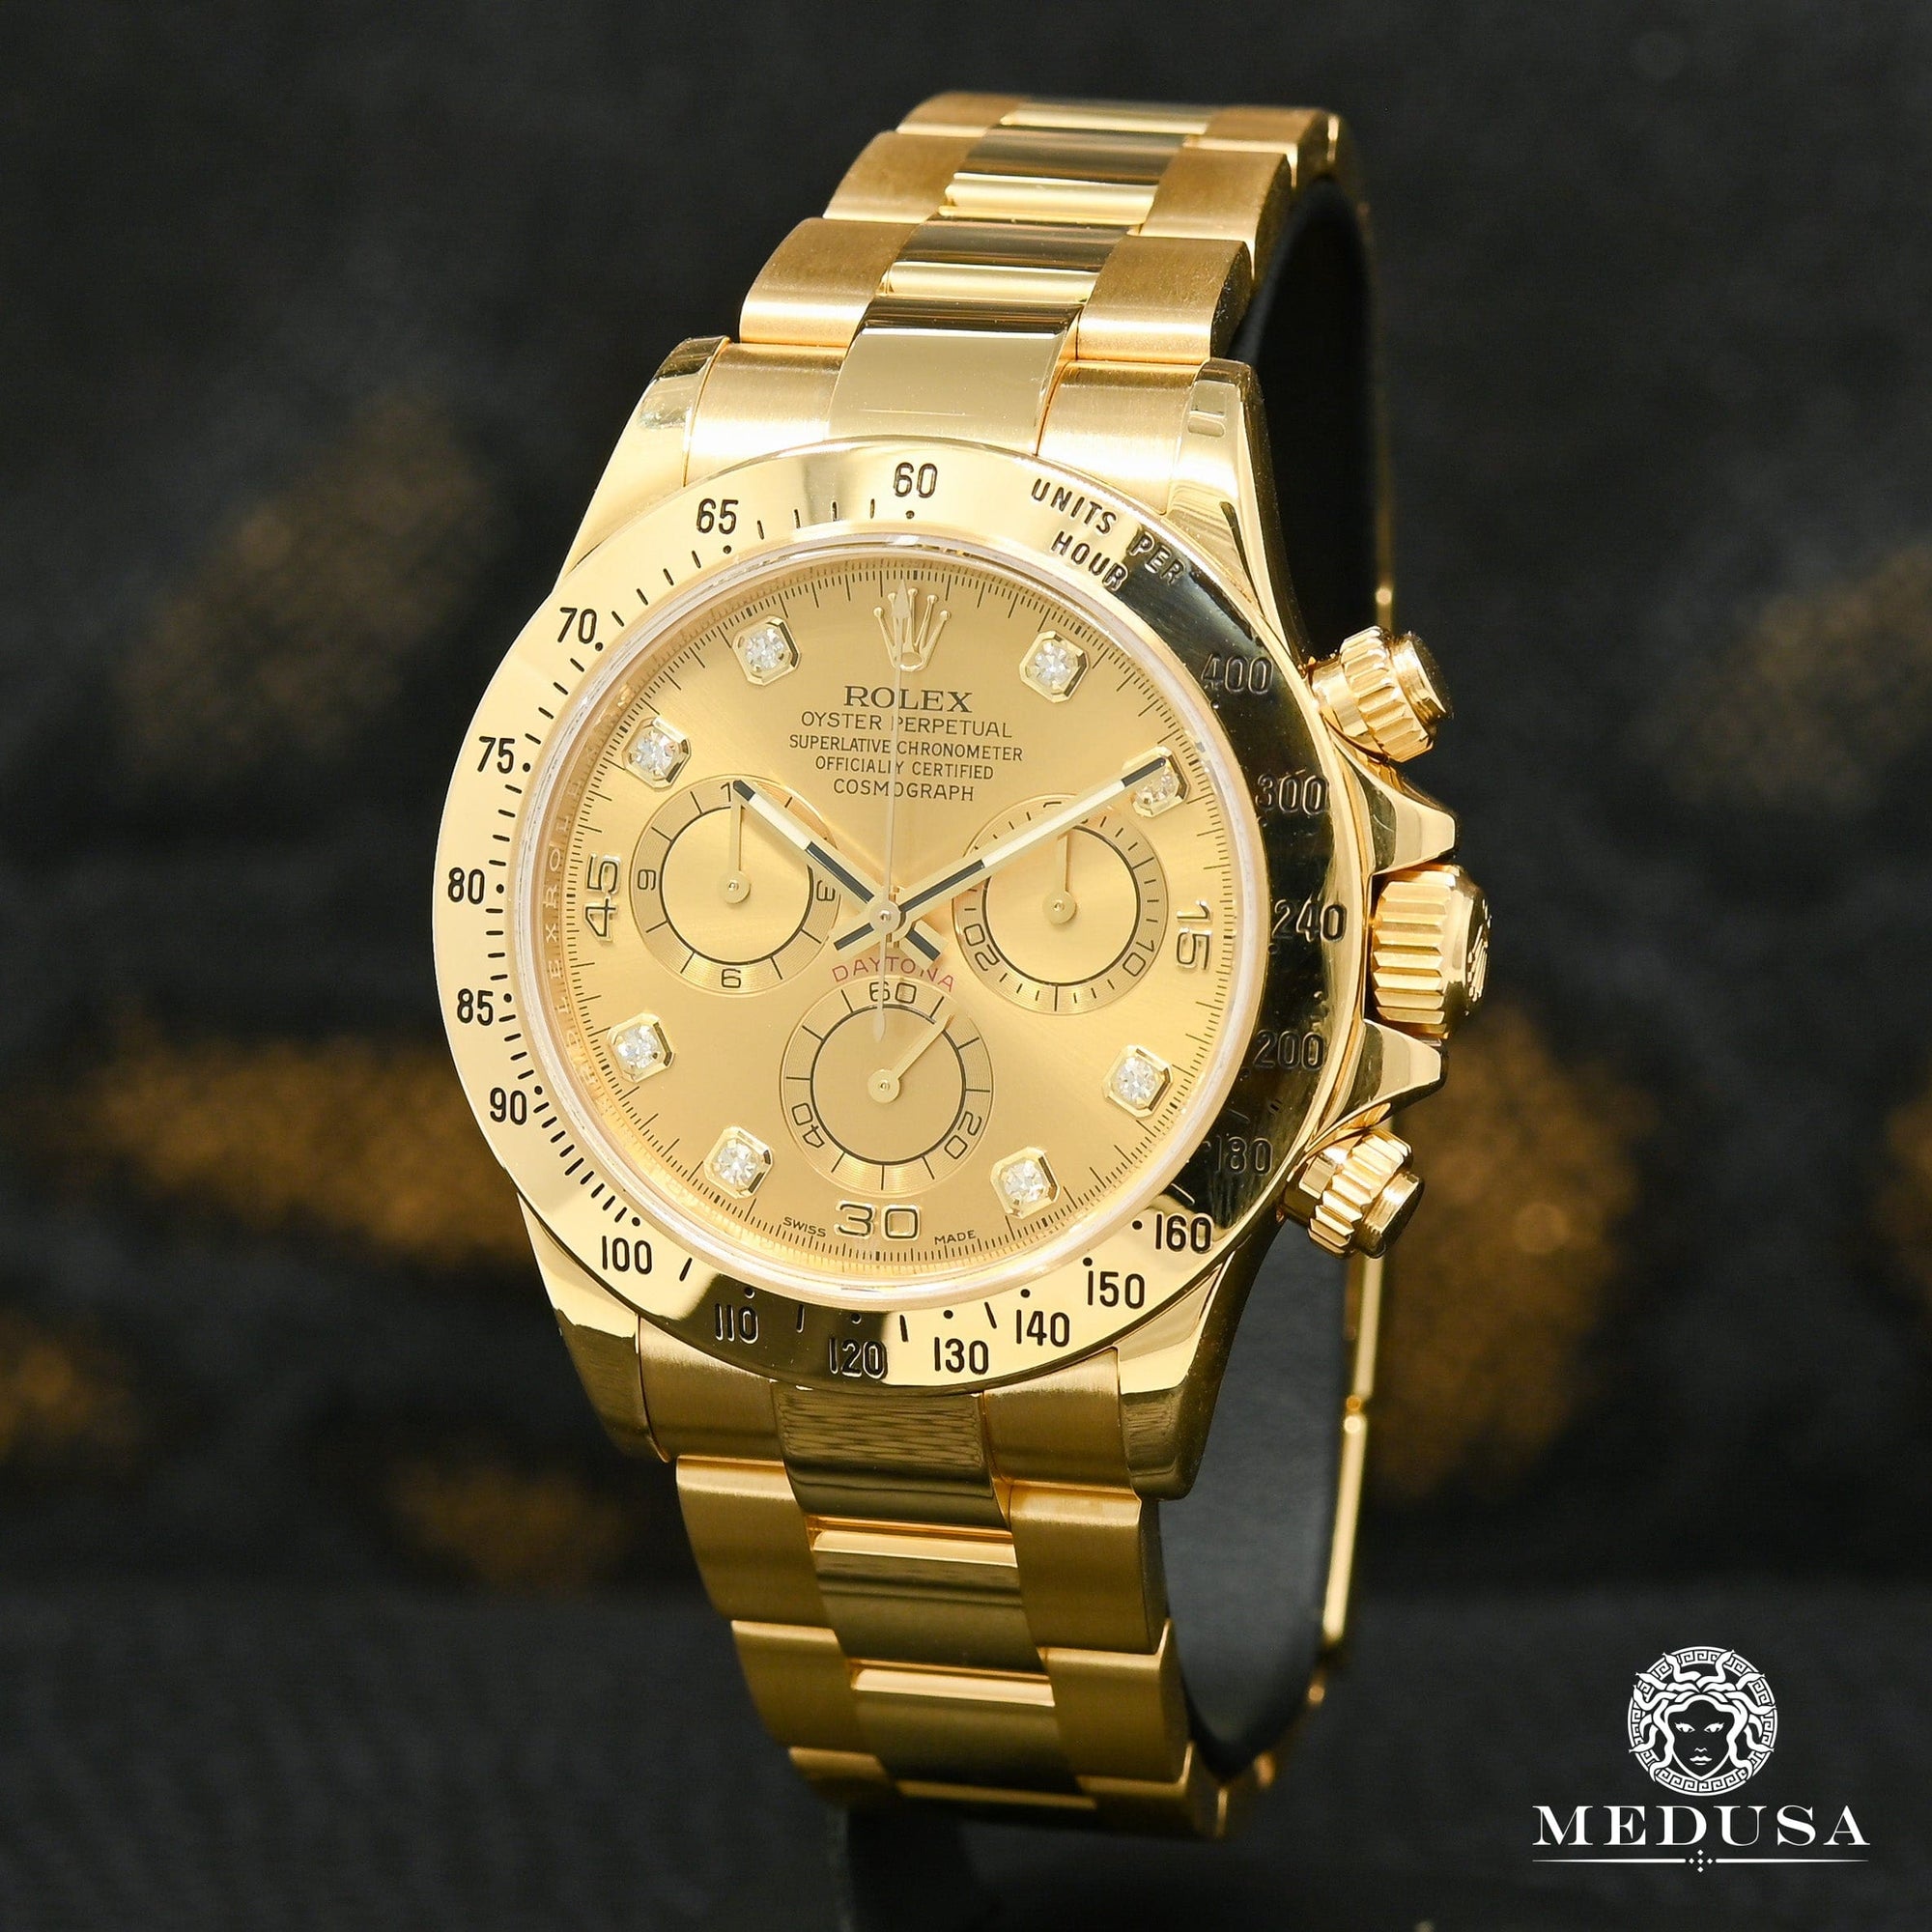 Rolex watch | Rolex Cosmograph Daytona 40mm Men's Watch - Champagne Gold Yellow Gold